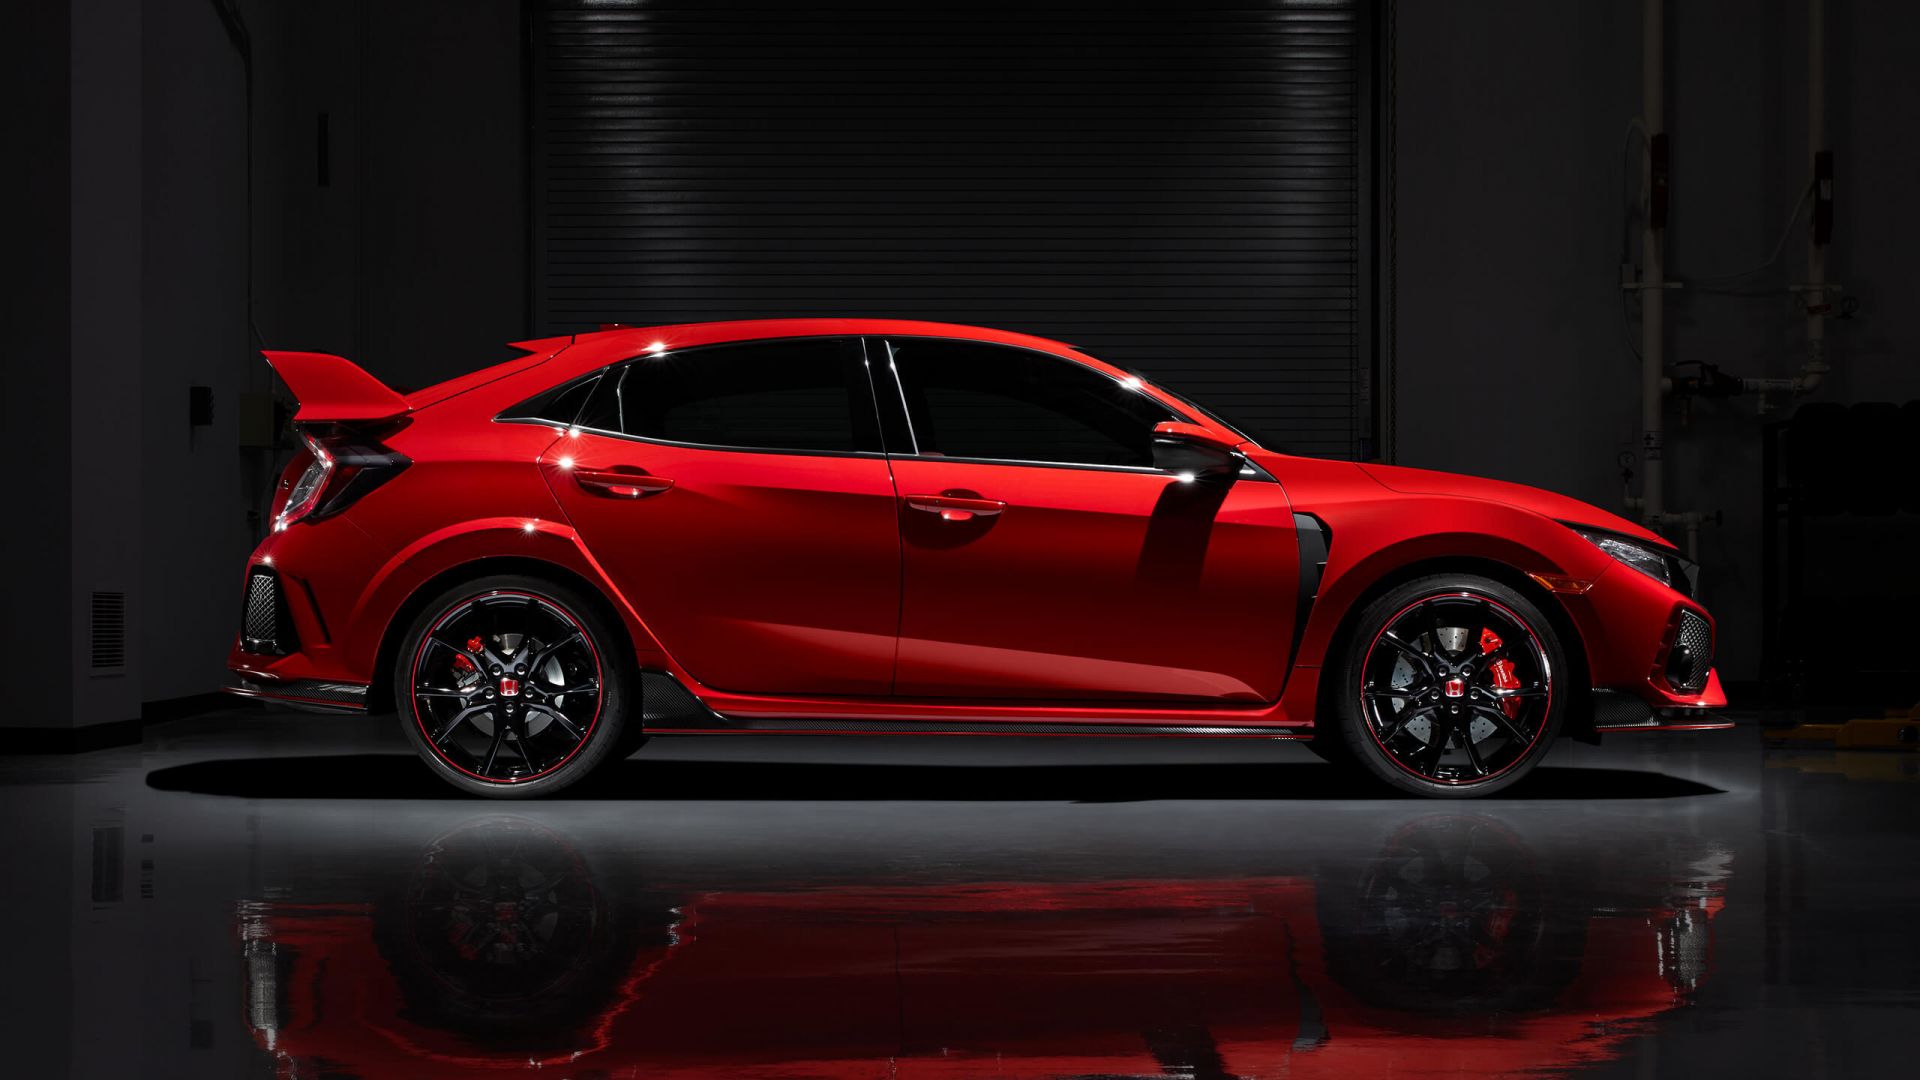 Wallpaper Red, Honda civic type R, side view, car